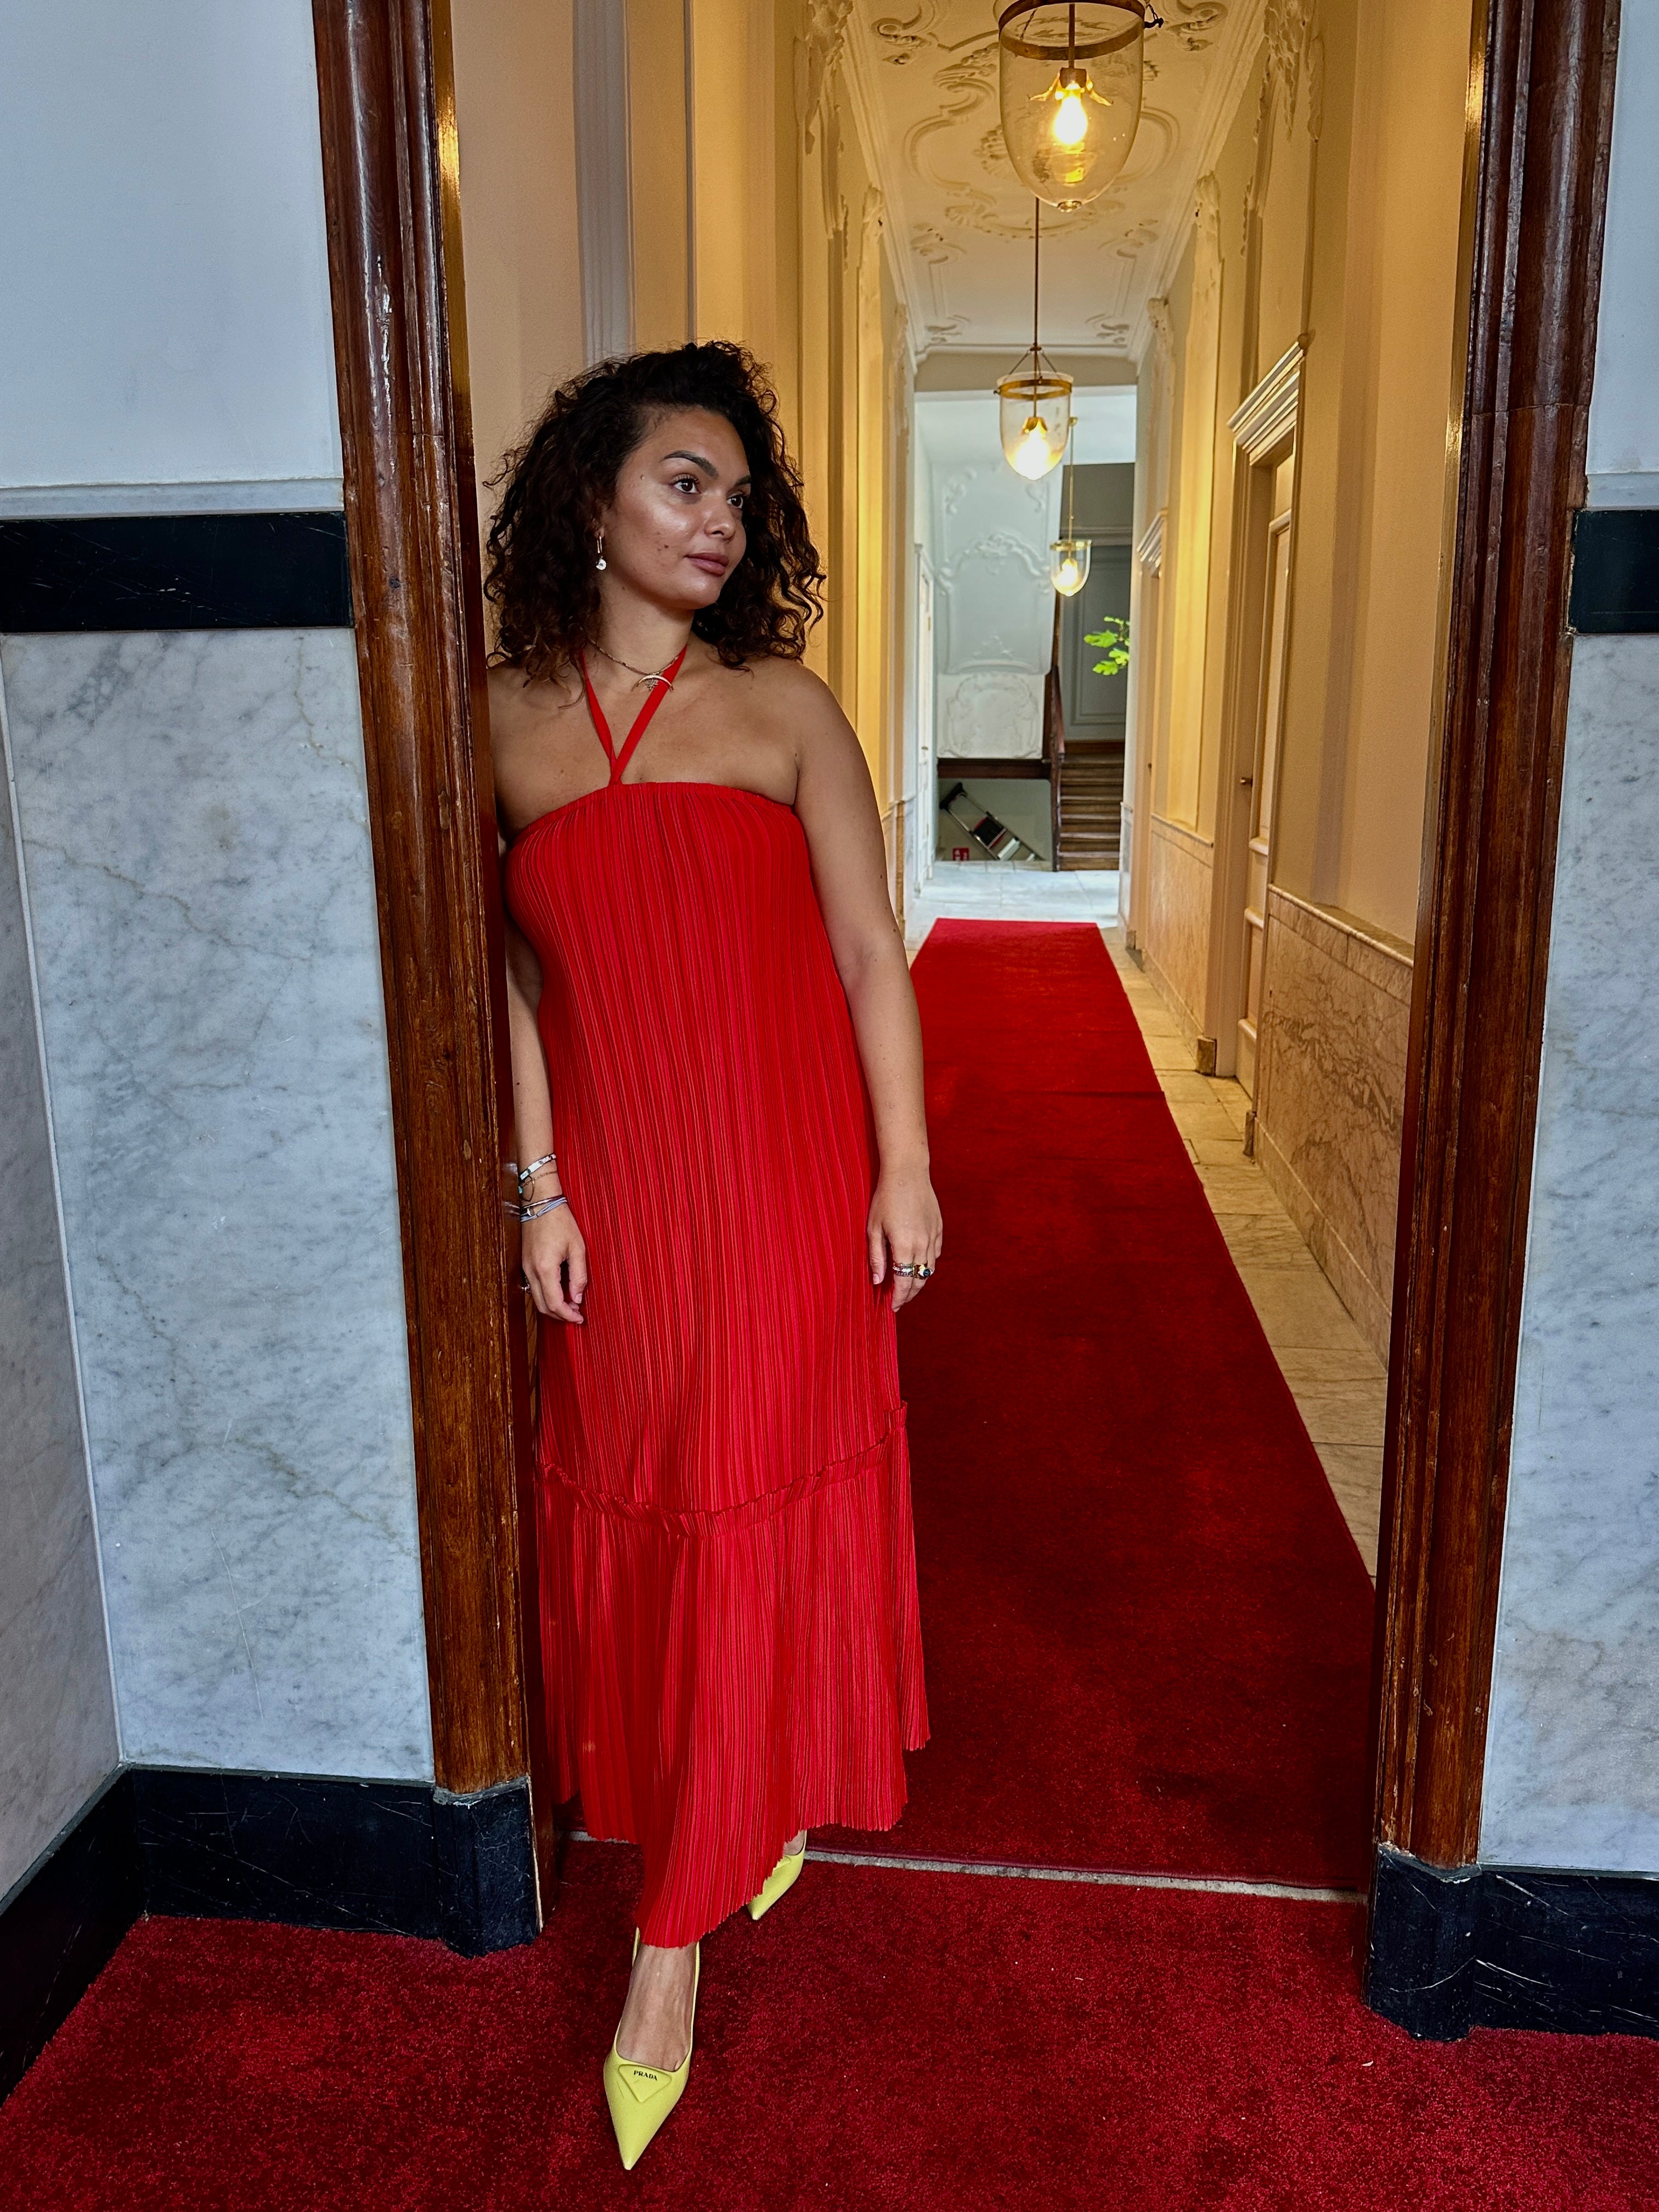 Rent for your upcoming holiday! Date night Bambah red dress to rent - kledingverhuur Nederland, België